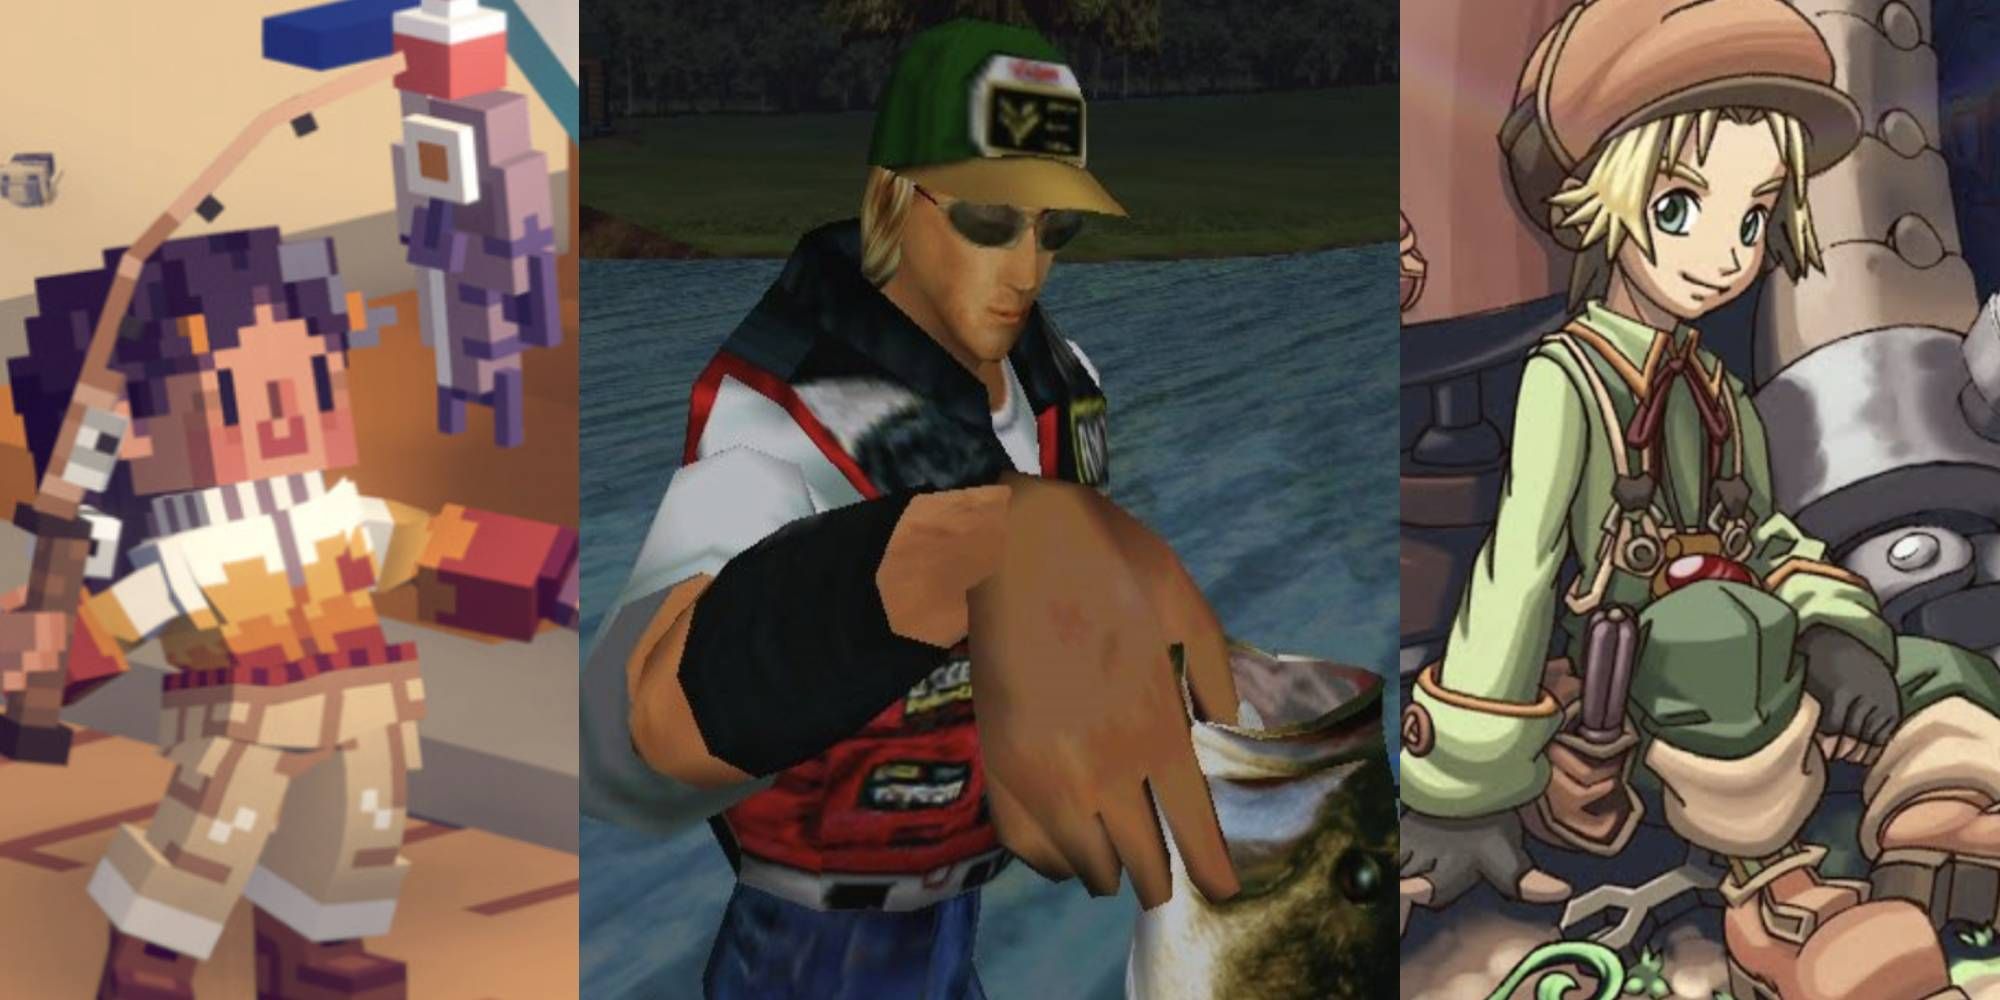 10 Best Fishing Video Games